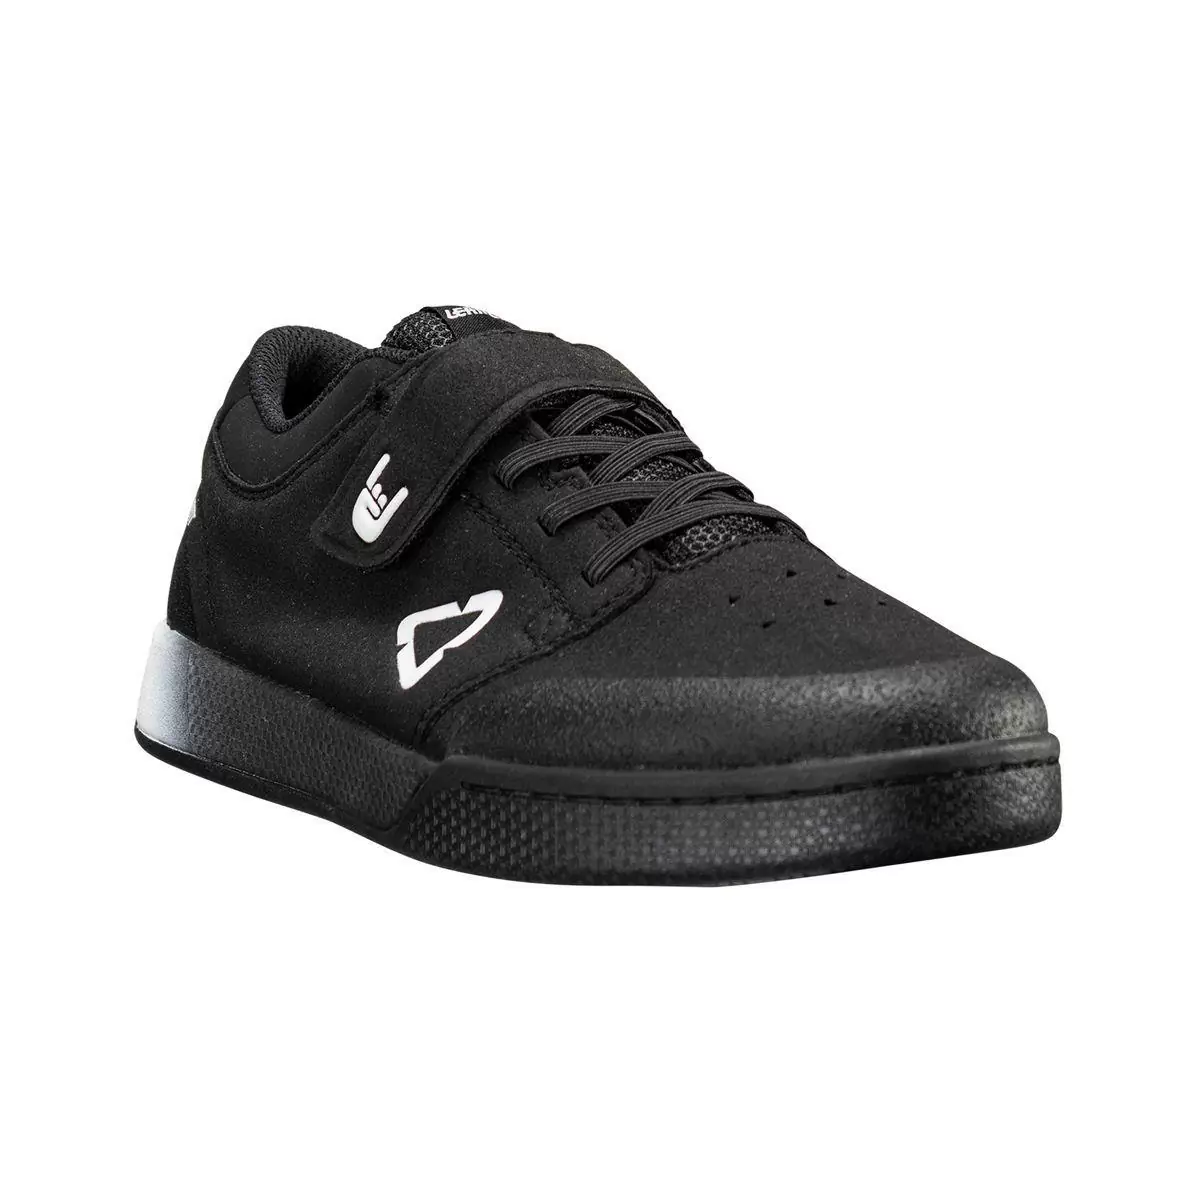 Chaussures VTT Enfant Flat 2.0 jr Noir Taille 32 - image